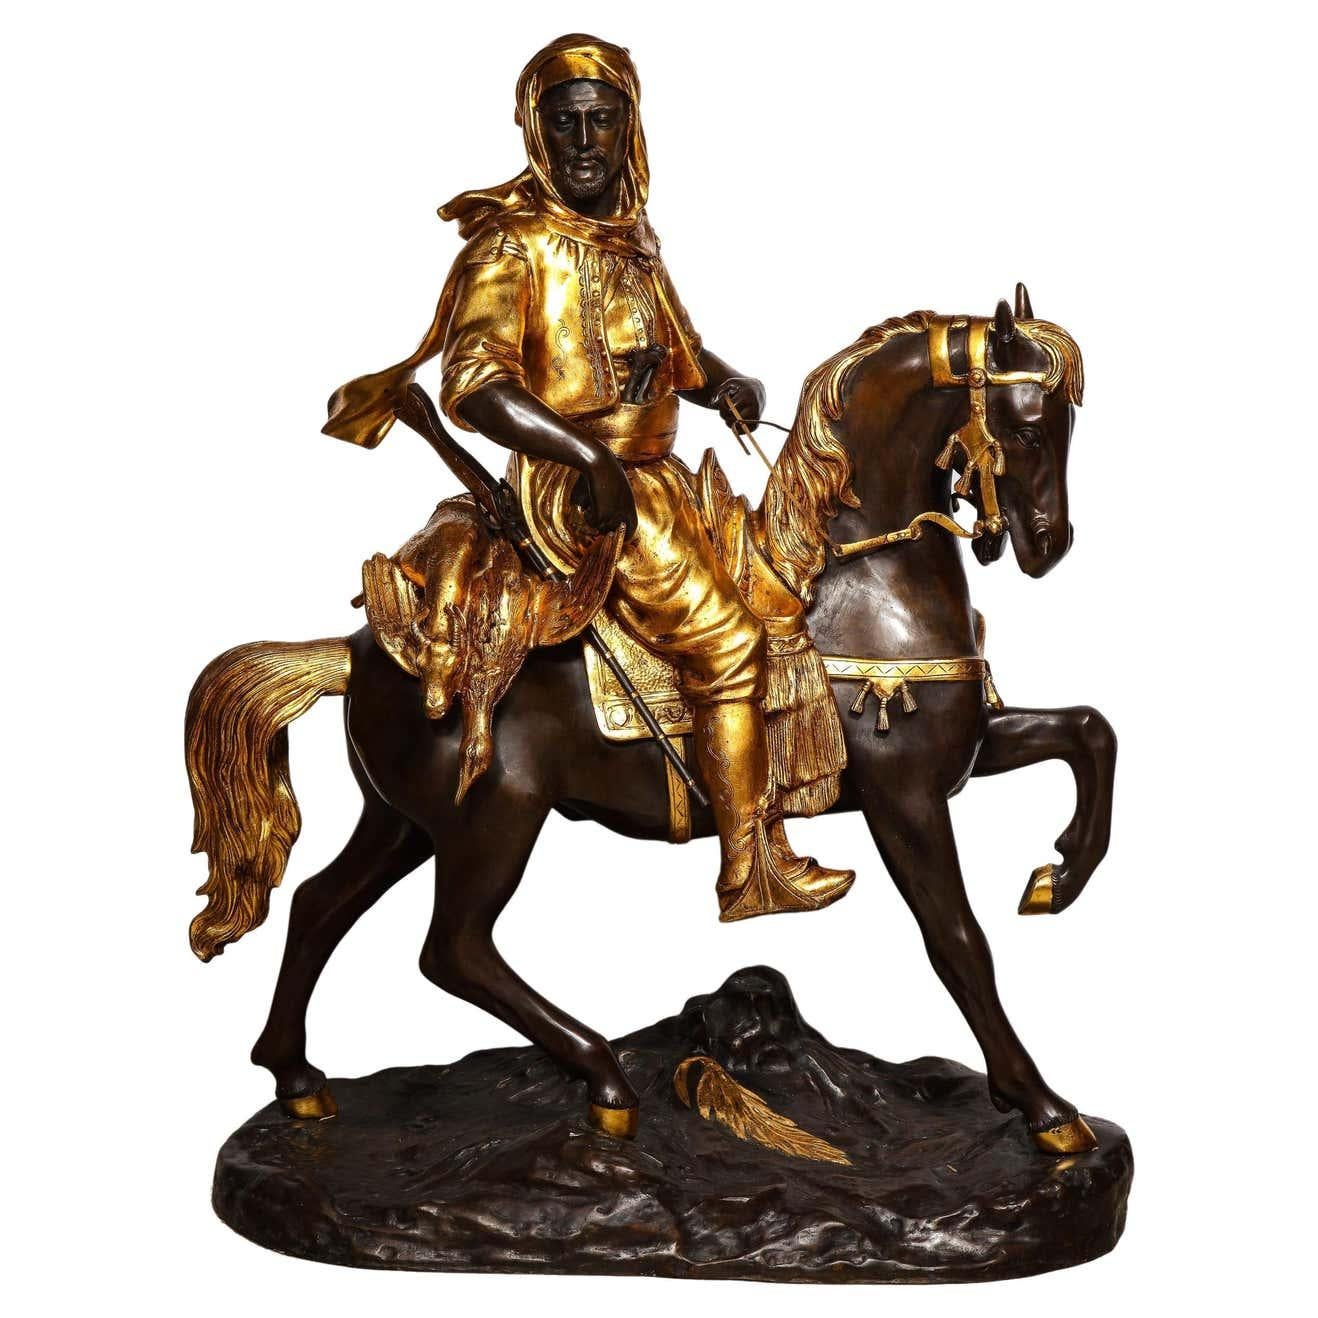 Émile Guillemin Figurative Sculpture - A Monumental Orientalist Bronze Sculpture "Cavalier Arabe" After Emile Guillemin